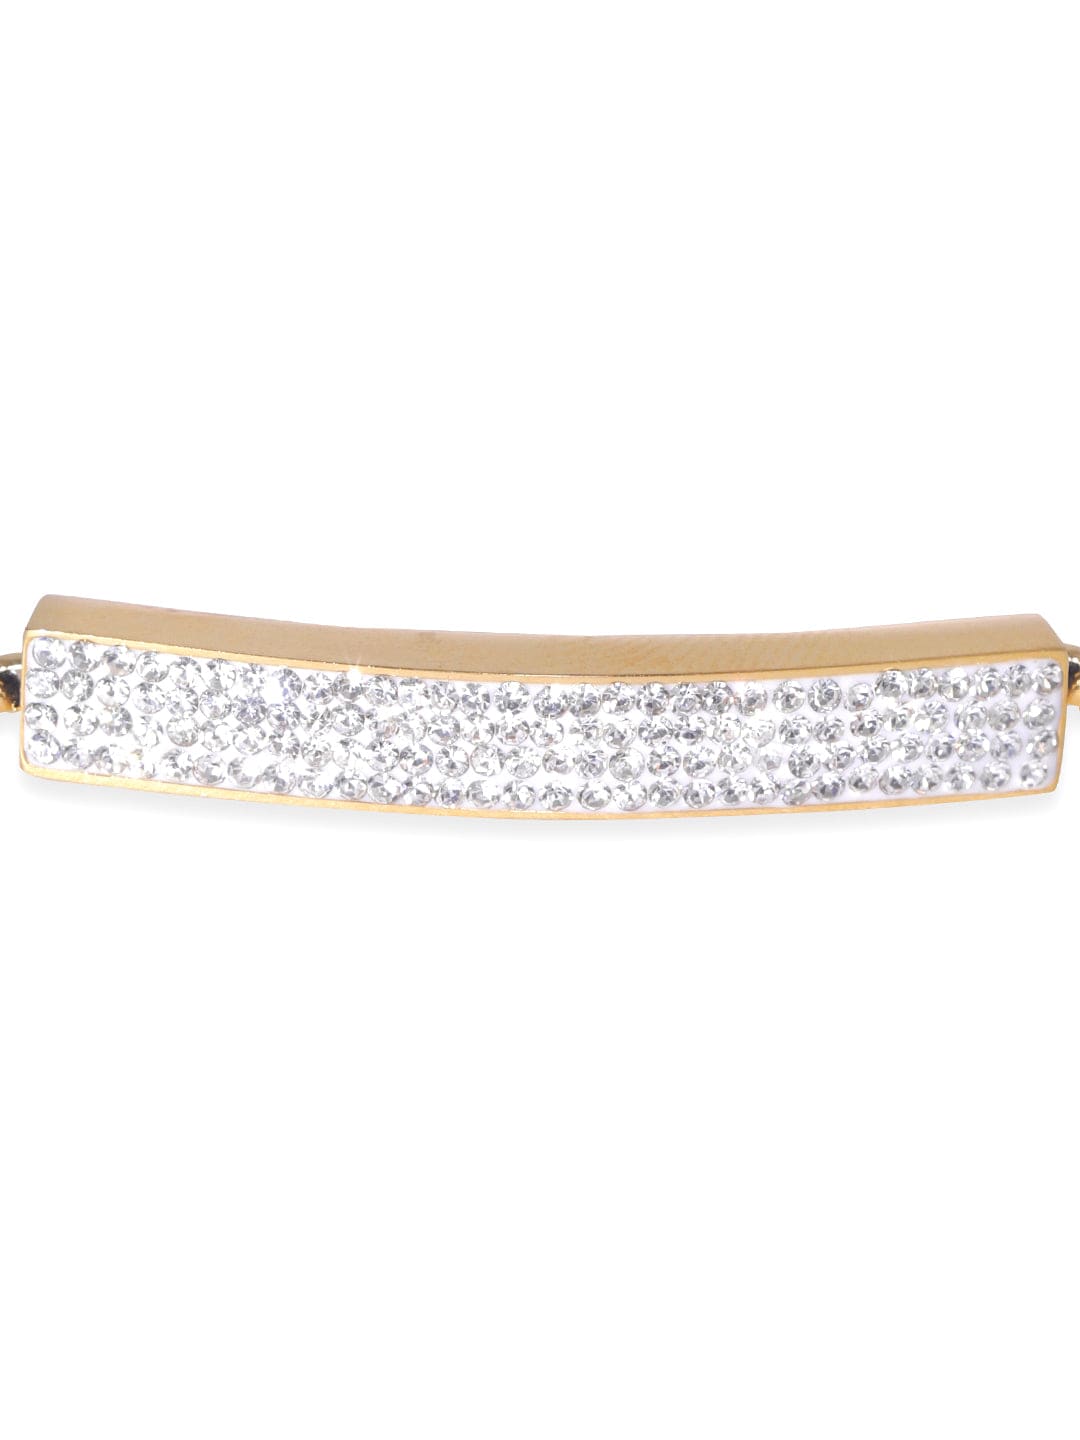 Rubans Voguish 18K Gold plated zirconia studded cuban link bracelet  Bangles &amp; Bracelets